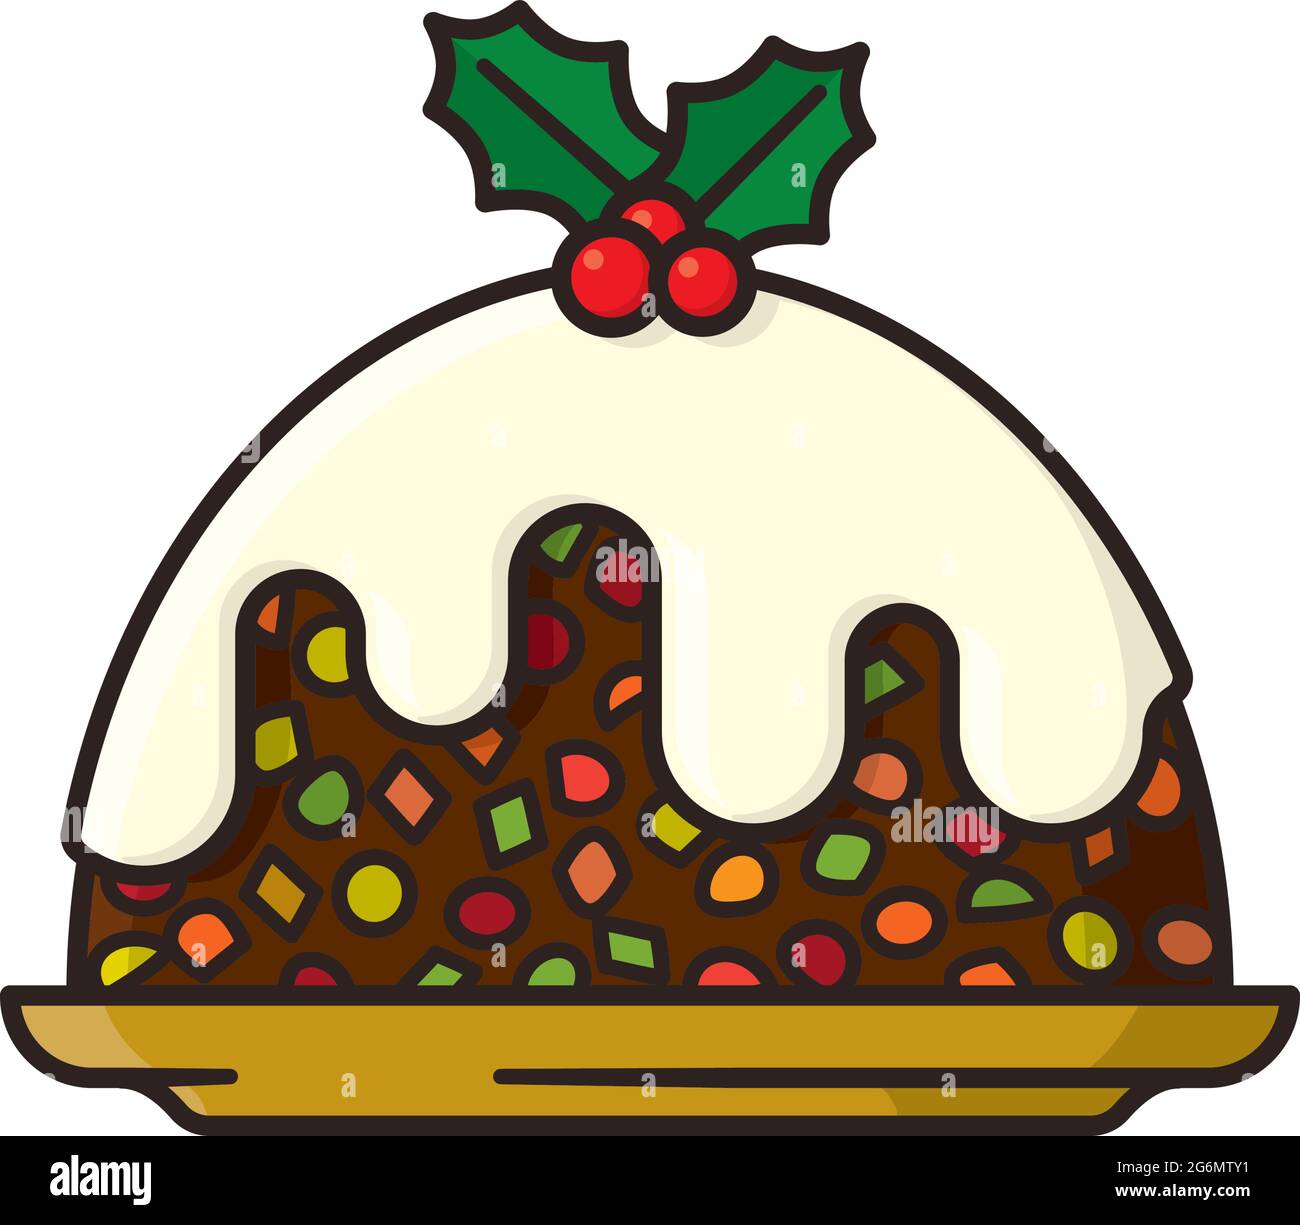 Christmas fruit cake isolated vector illustration for Fruit Cake Day on December 27. Stock Vector